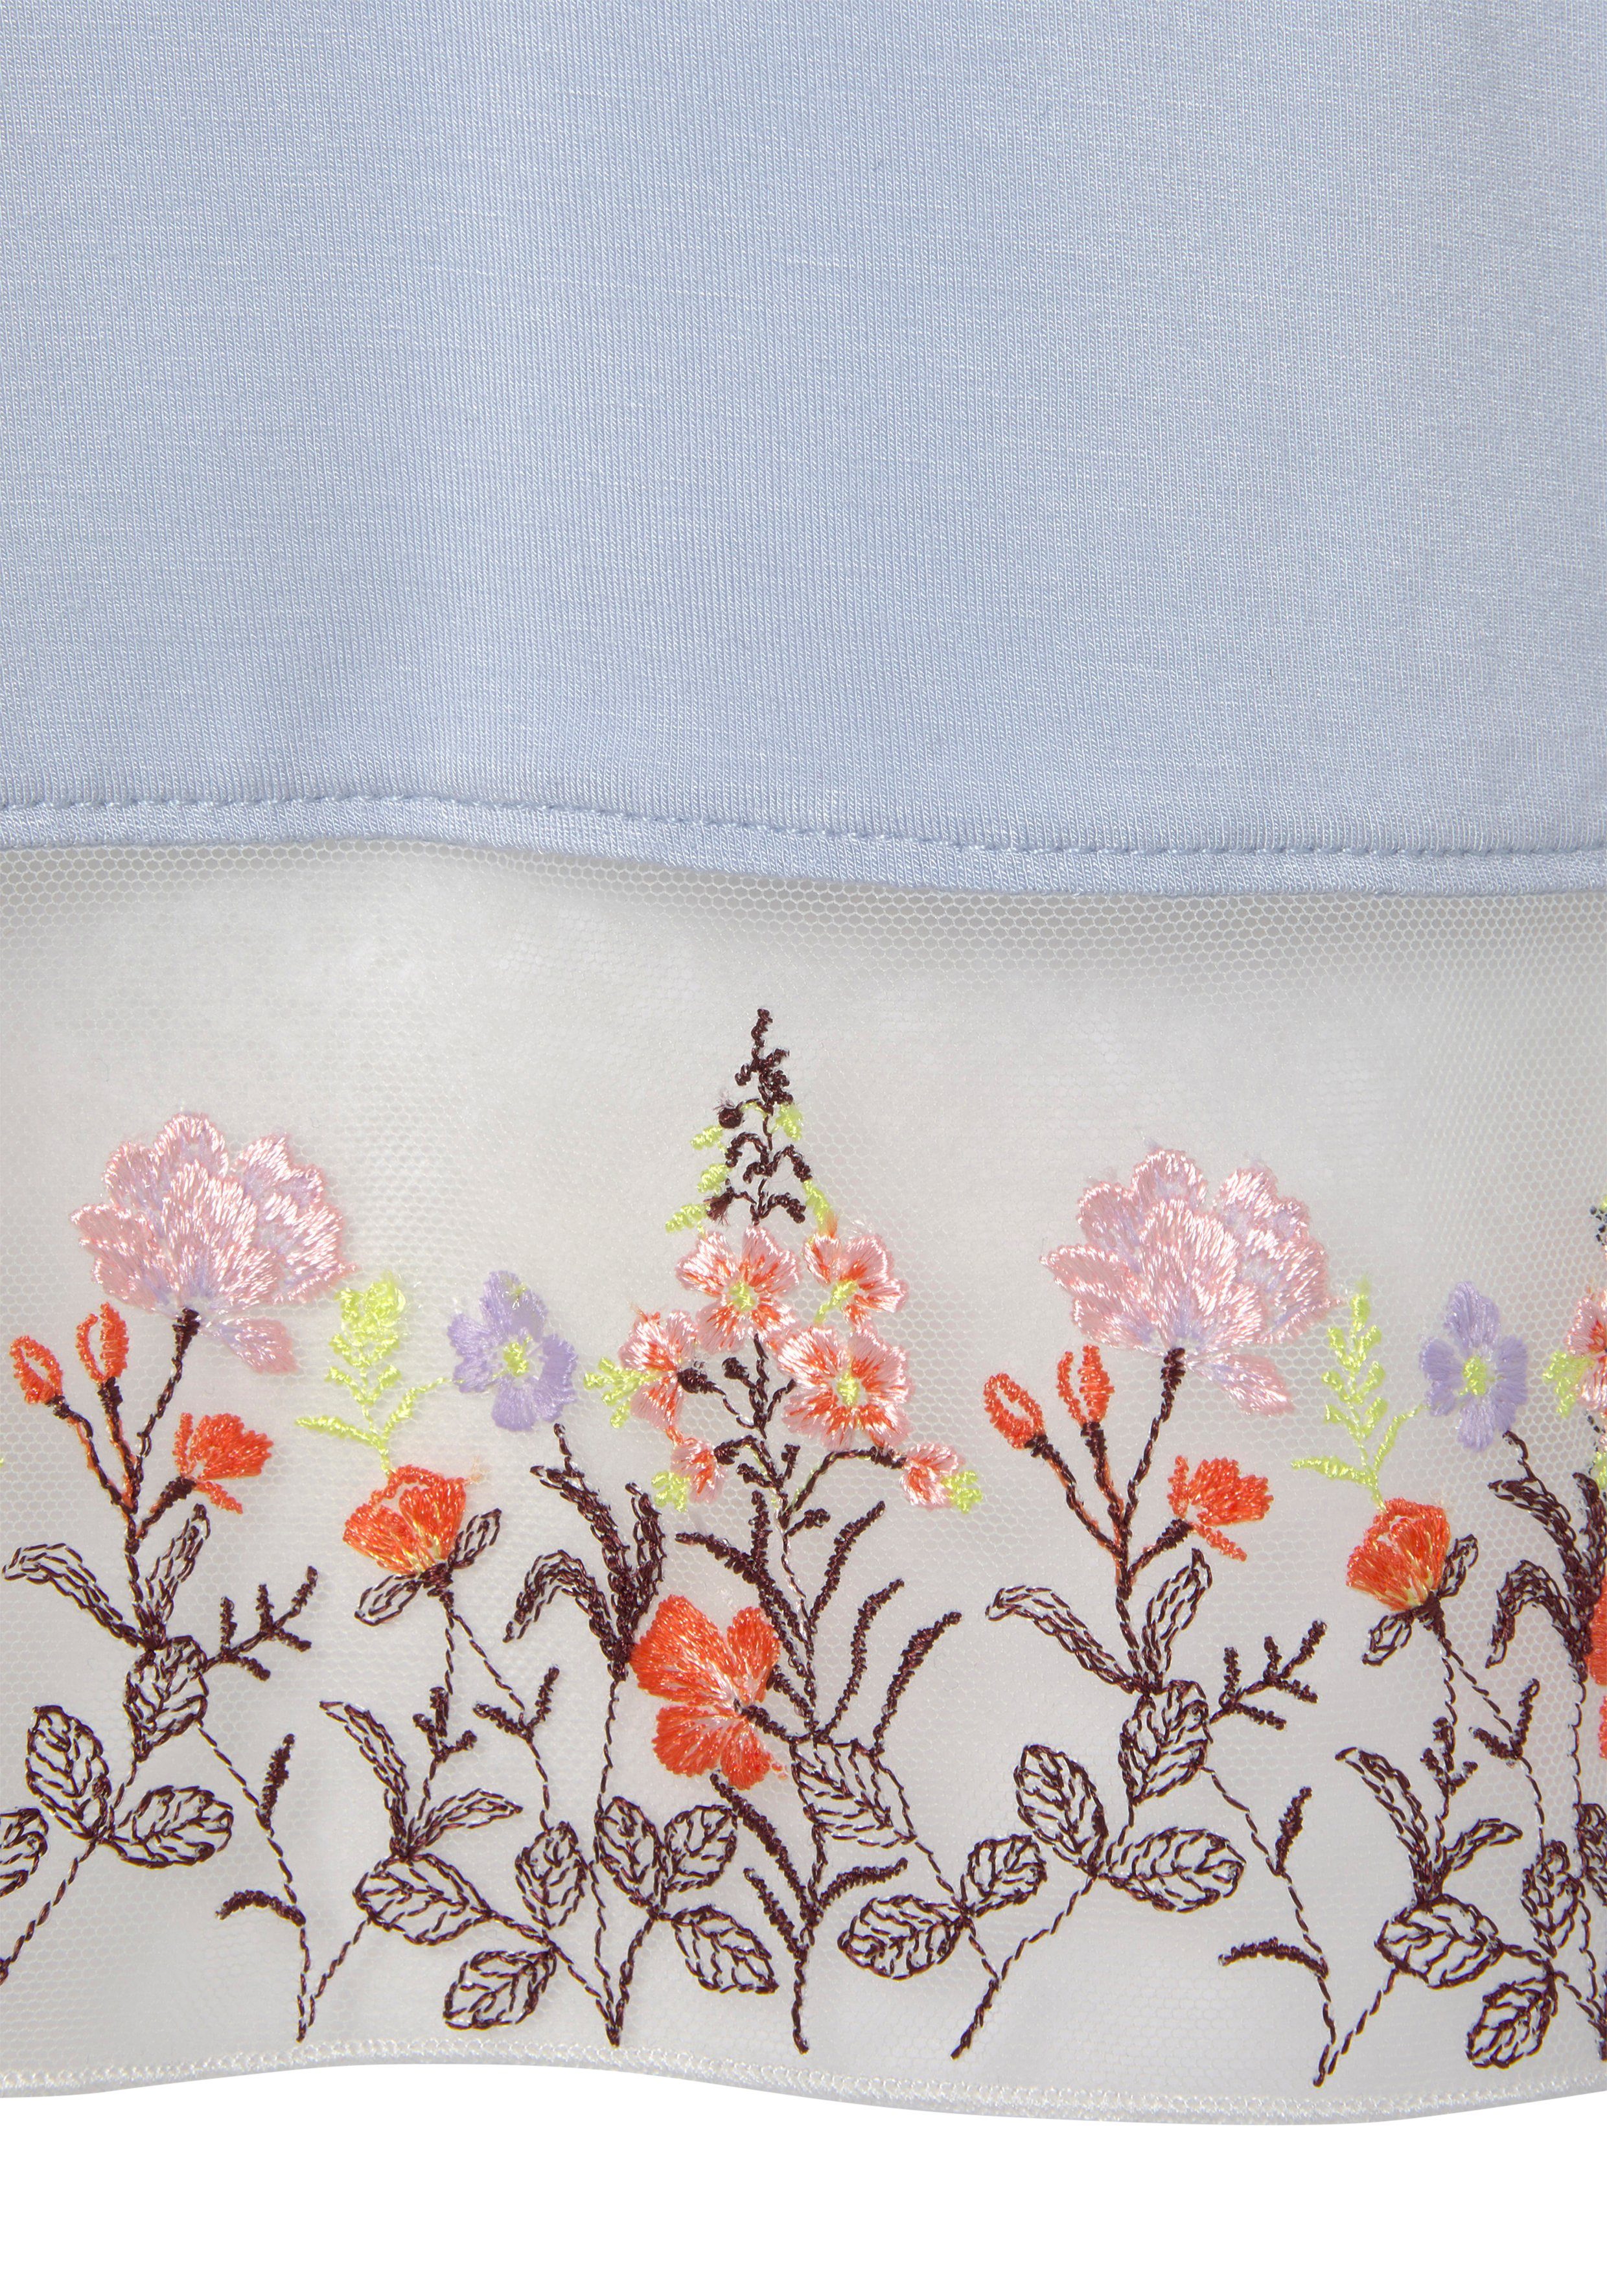 Kimono-Kragen, LASCANA Hellblau Spitze Gürtel, bestickter Kimono, Kurzform, mit Viskose,